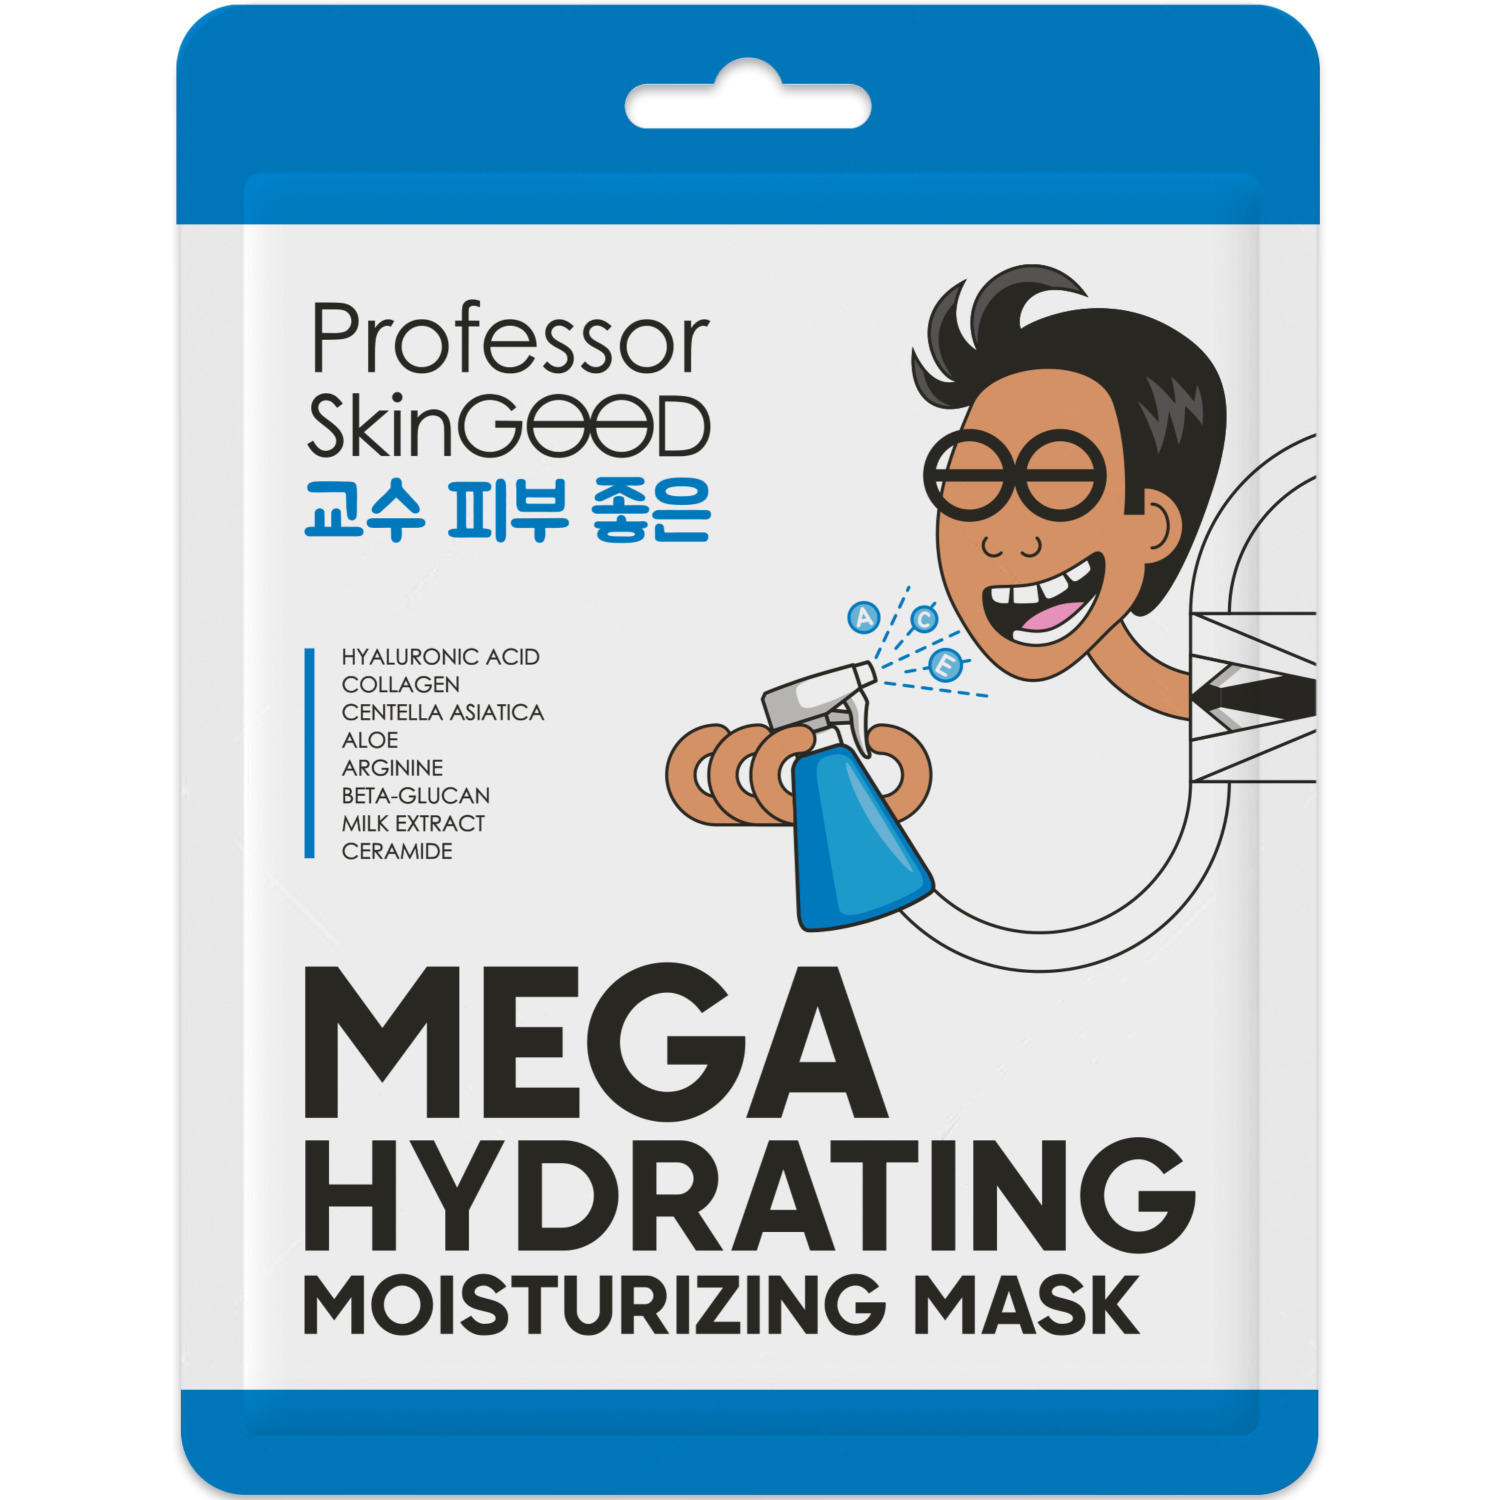 Professor SkinGOOD Увлажняющая маска Mega Hydrating Moisturizing Mask, 25 г (Professor SkinGOOD, Маски) professor skingood увлажняющая маска mega hydrating moisturizing mask 2 шт